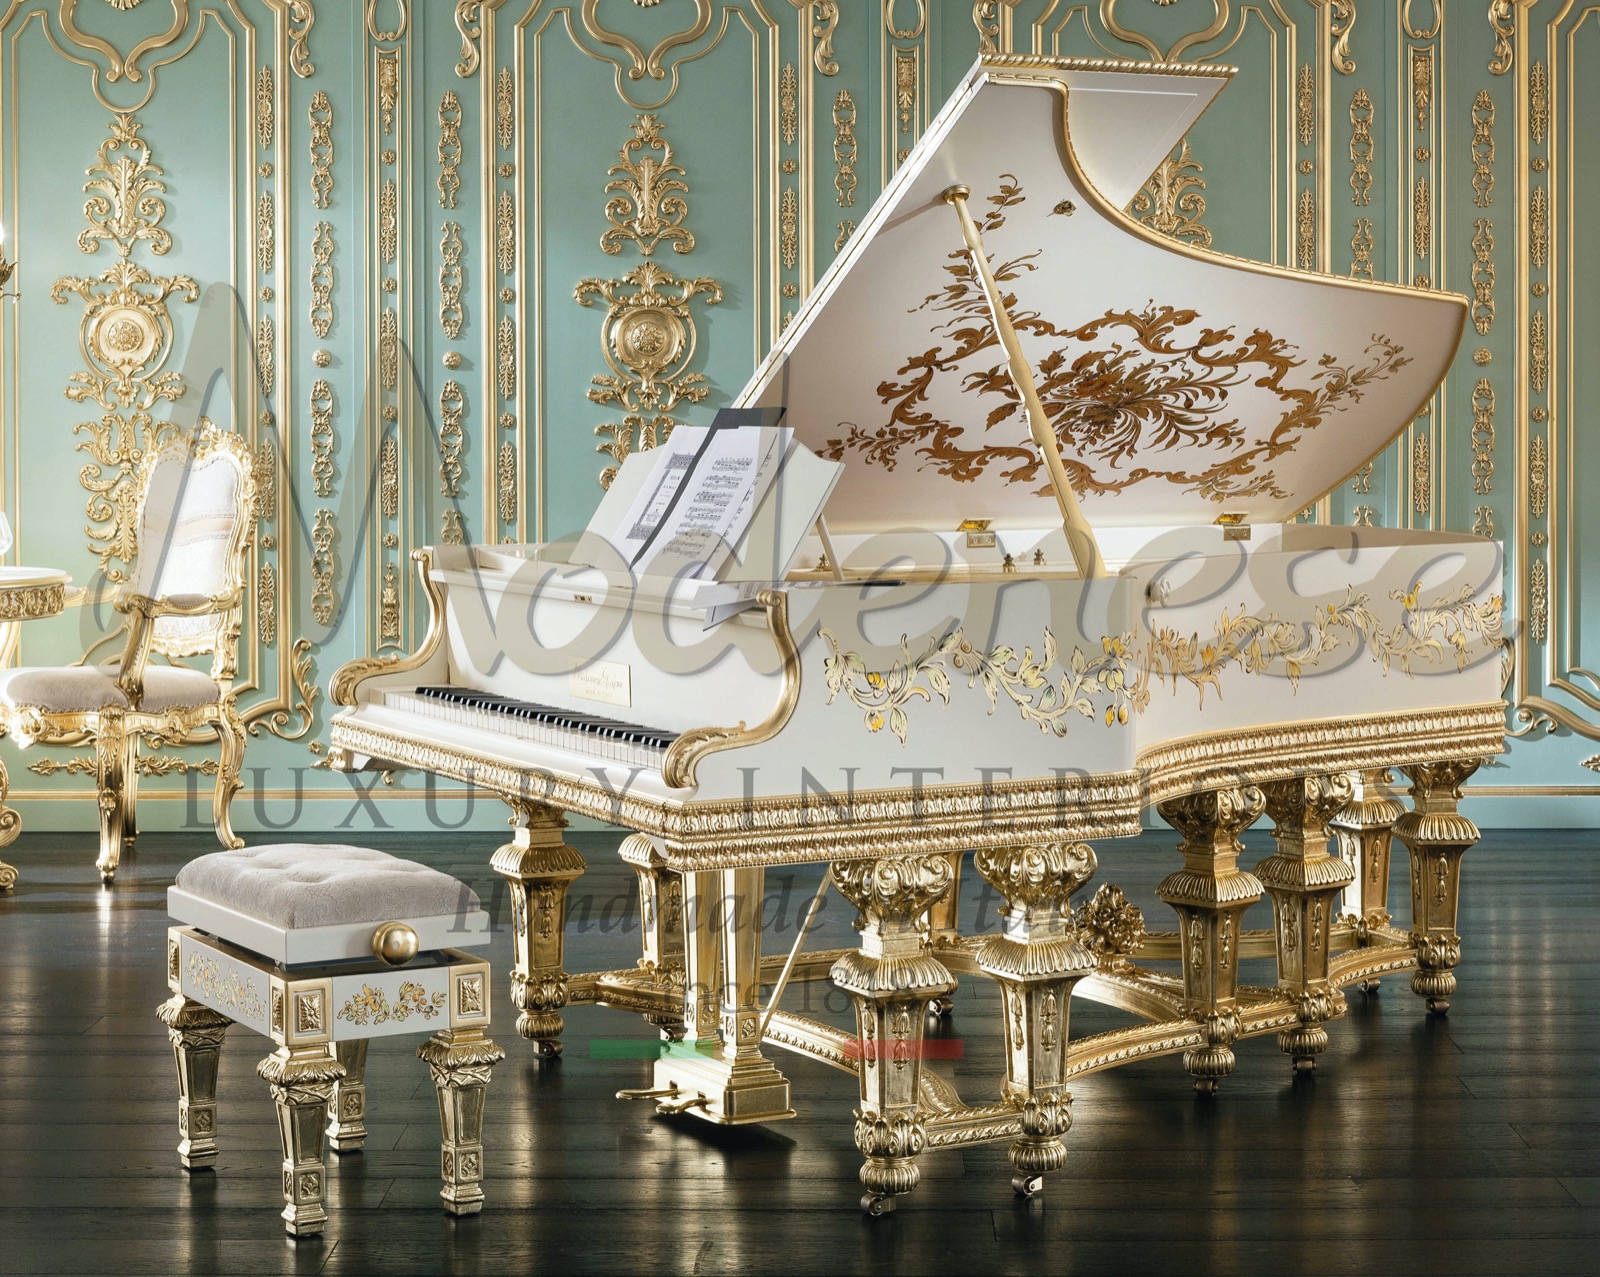 luxury Italian interiors artisanal production music piano restoration Steinway Bernstein blunter classic décor handmade gold leaf